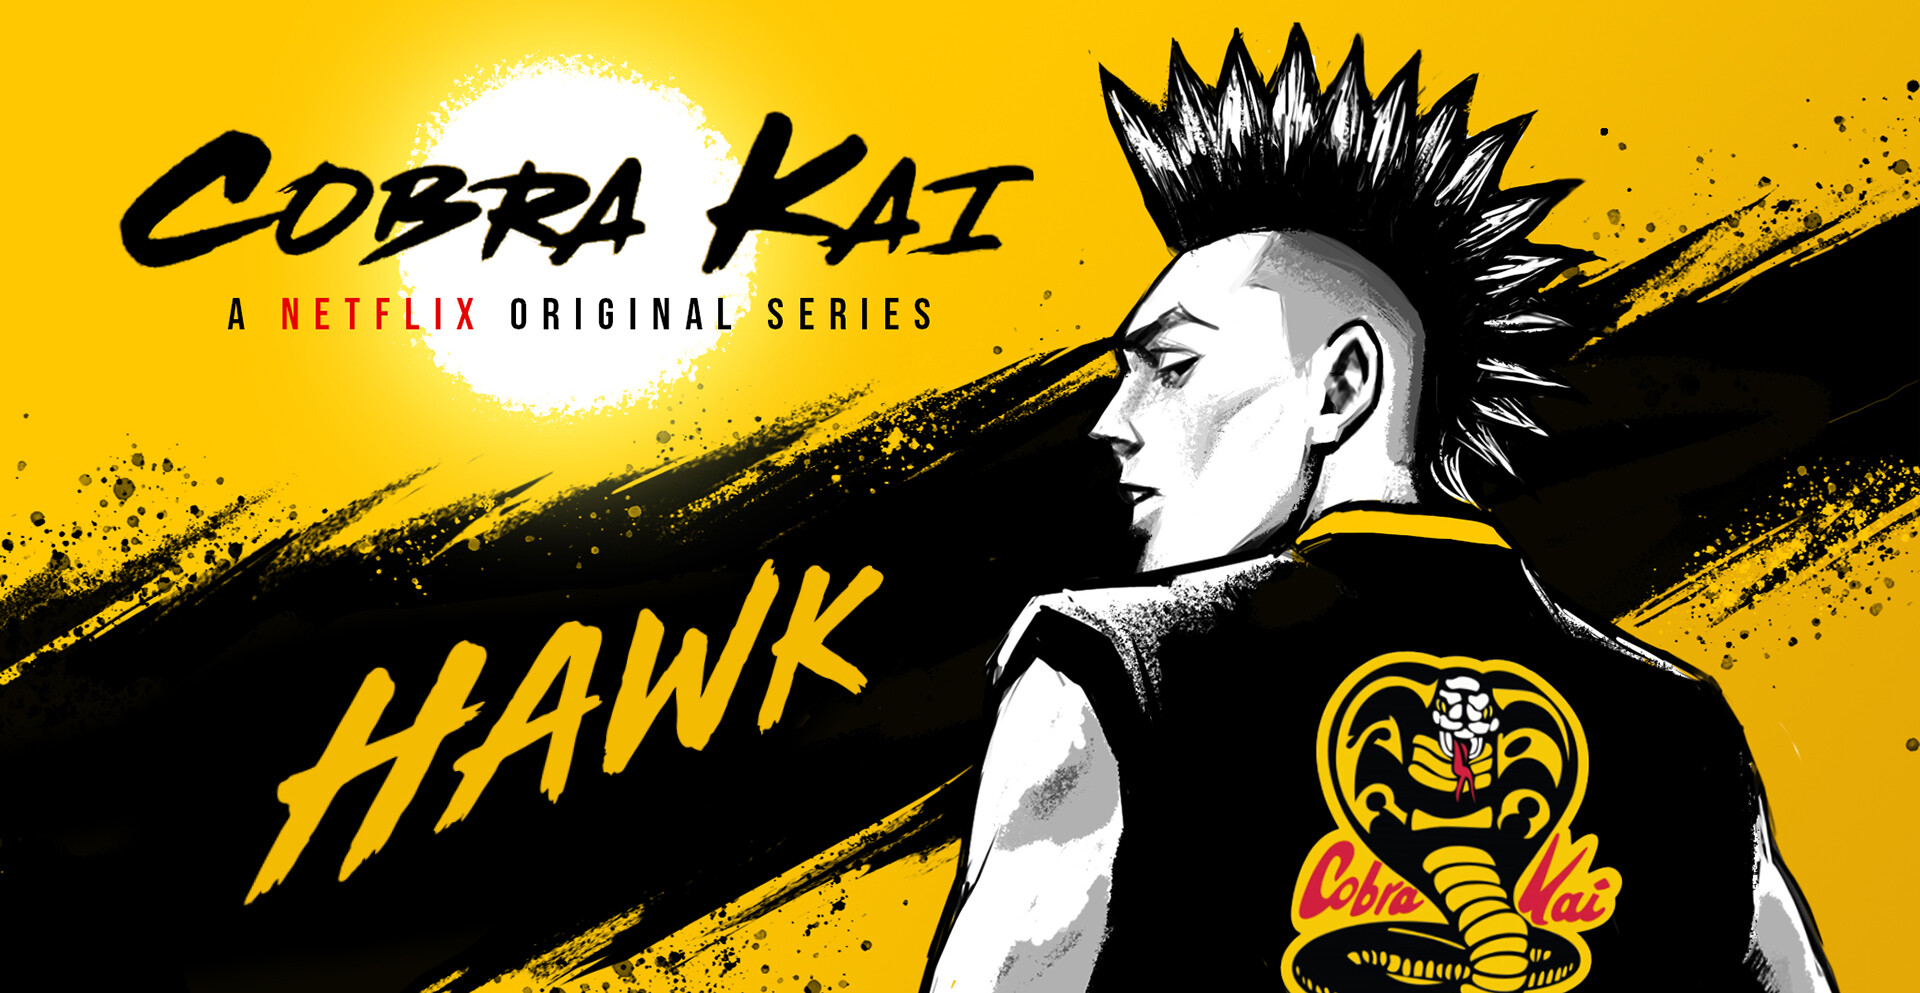 hawk cobra kai - Cobra Kai - Posters and Art Prints